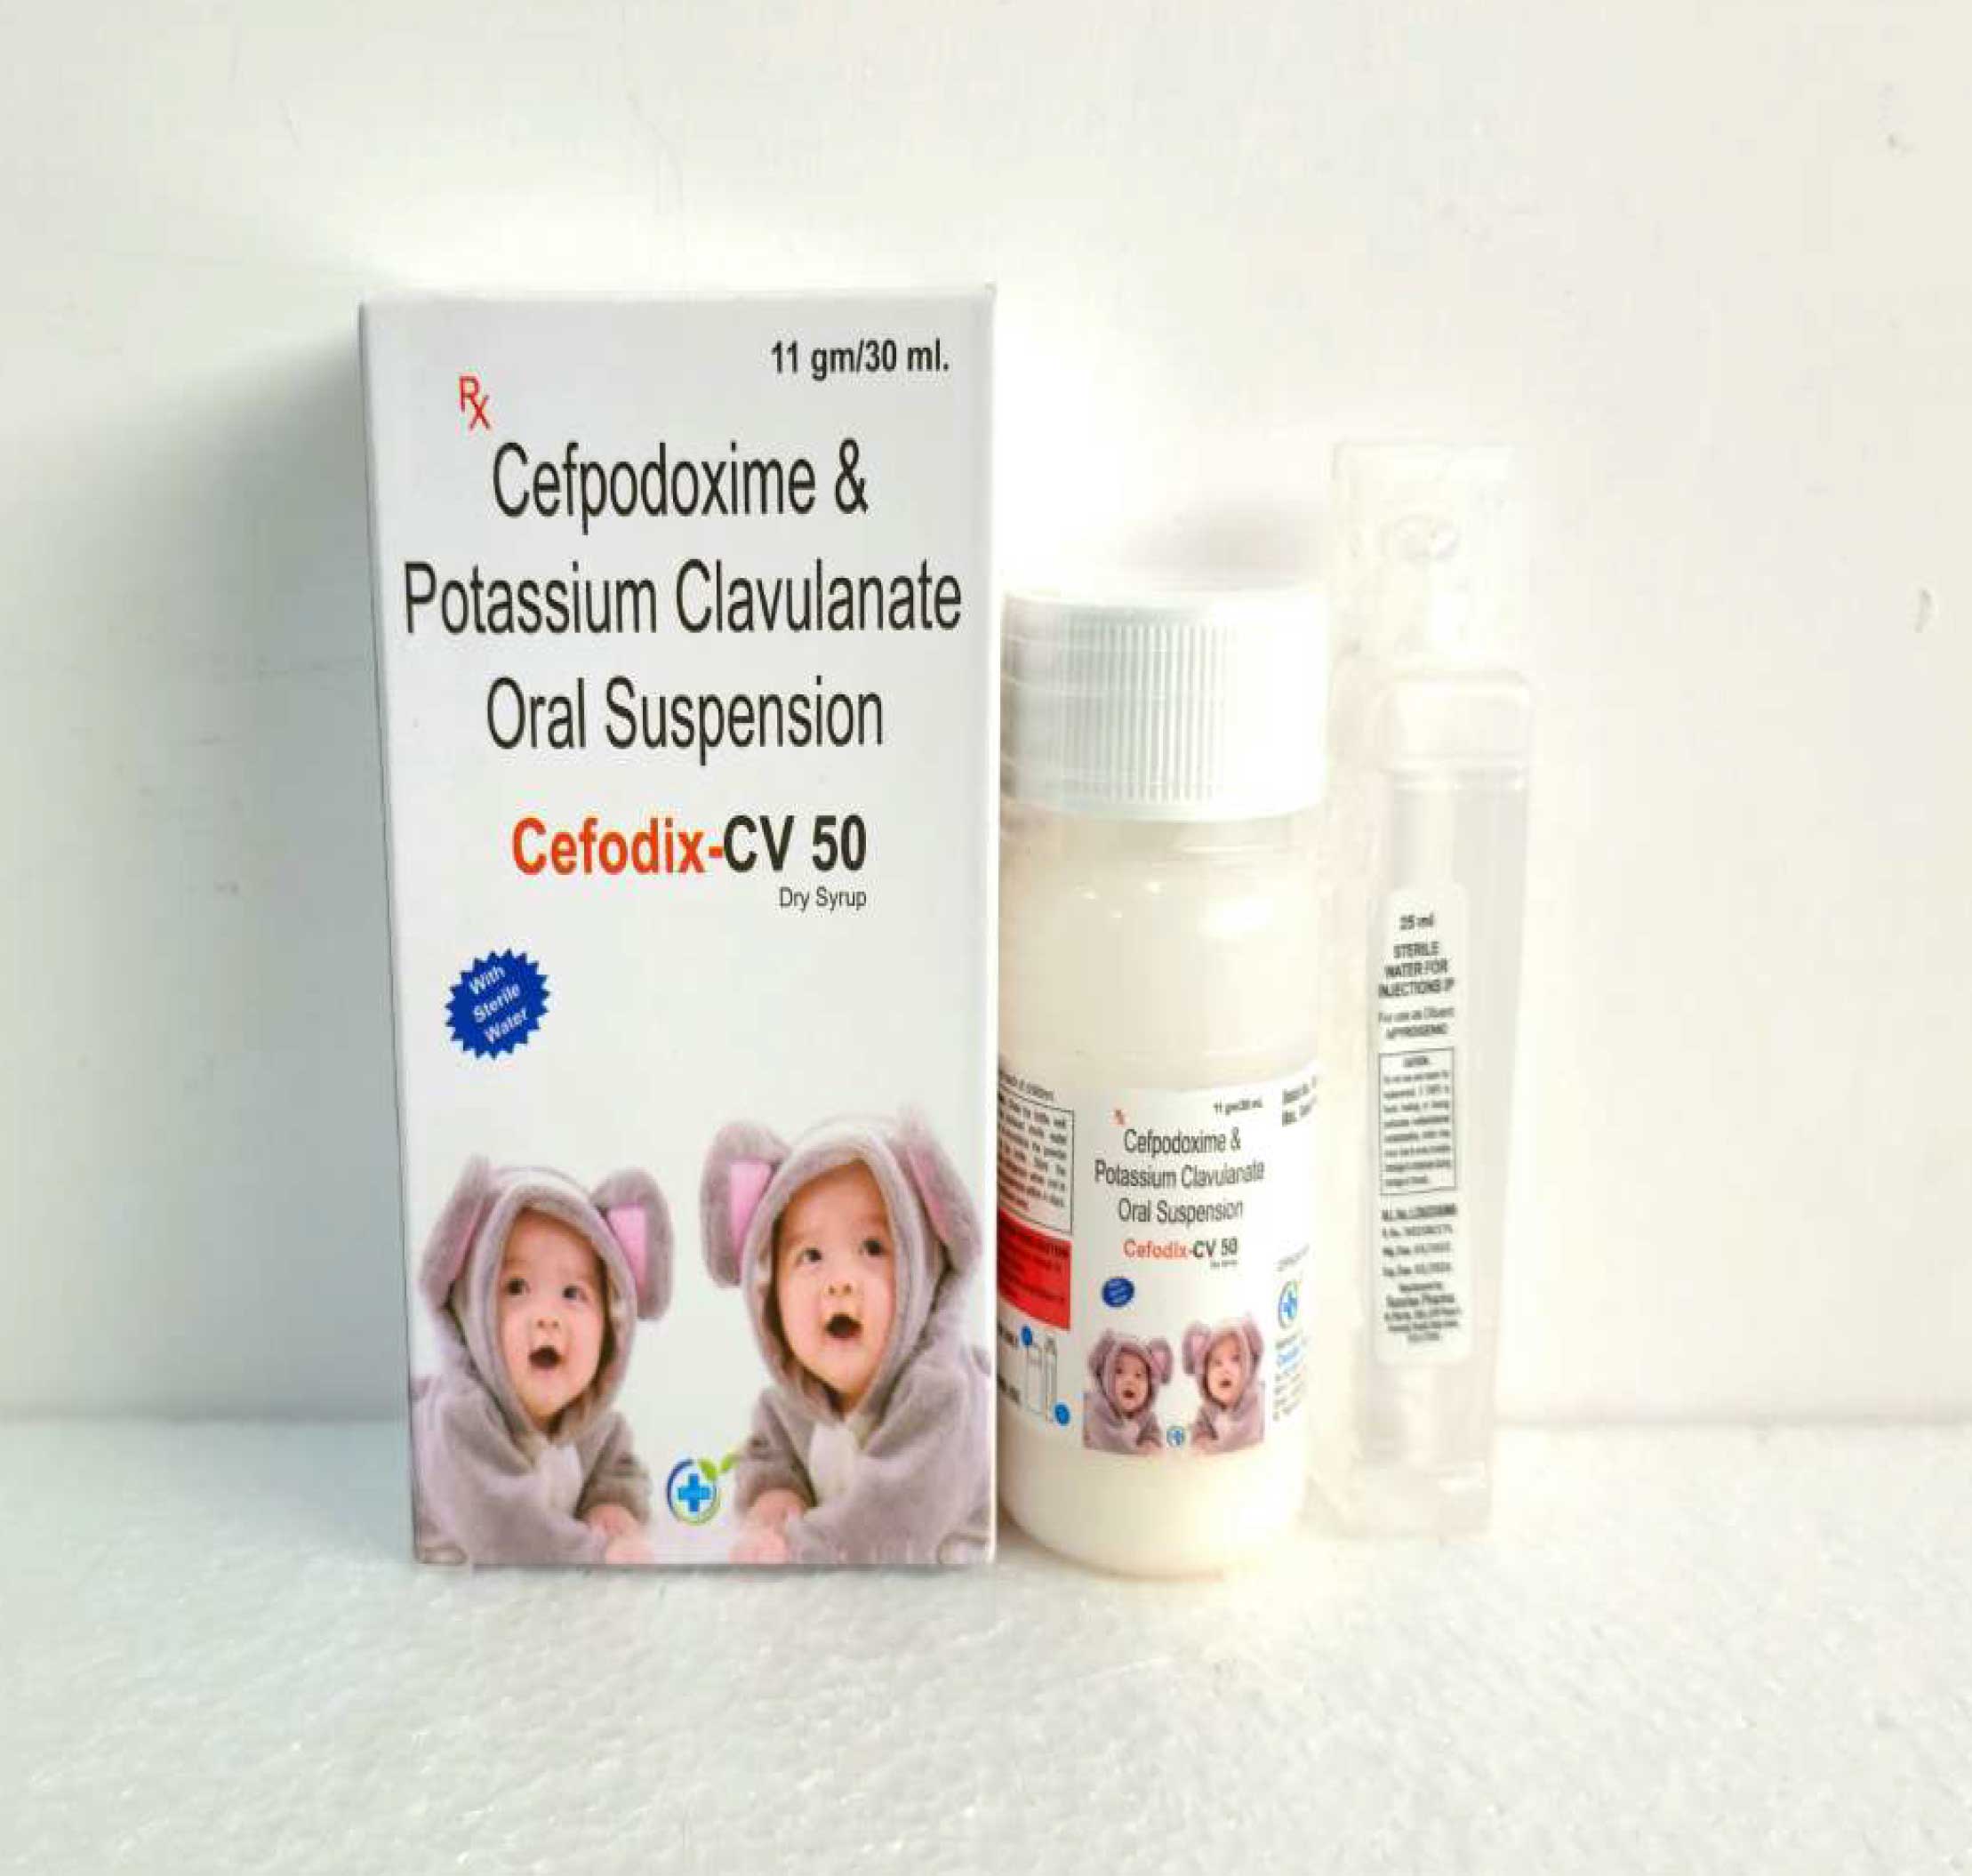 Product Name: Cefodix CV 50, Compositions of Cefodix CV 50 are Cefpodoxime & Potassium Clavulanate Oral Suspension IP - Caddix Healthcare